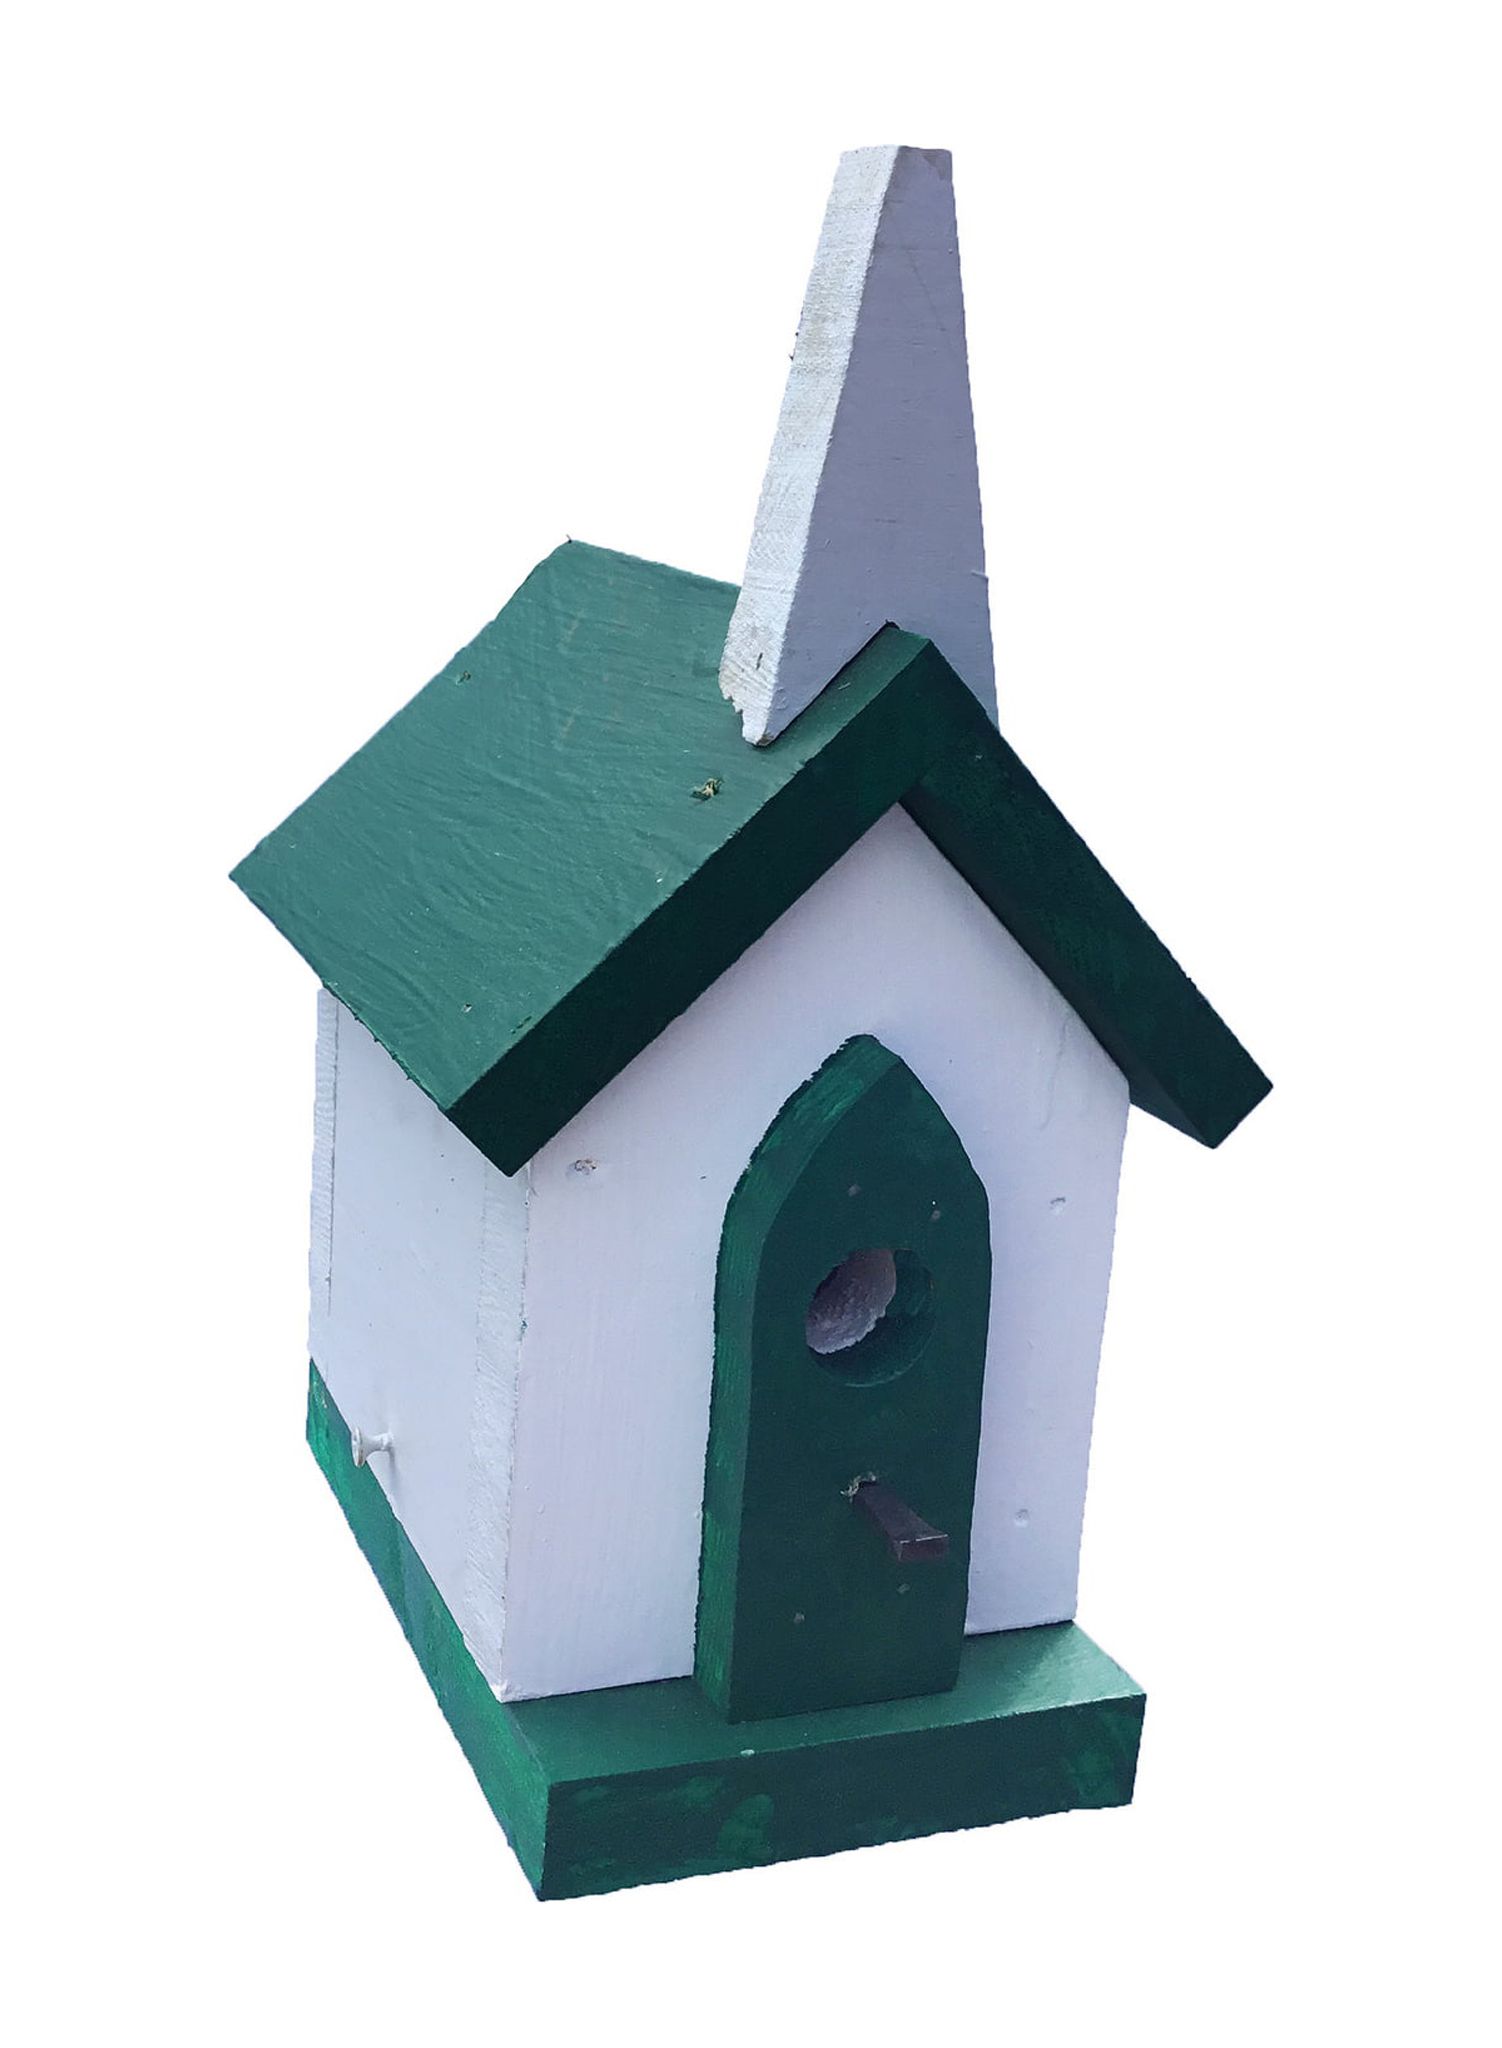 Pine Wood Small Church Wren Bird House - image 1 of 2